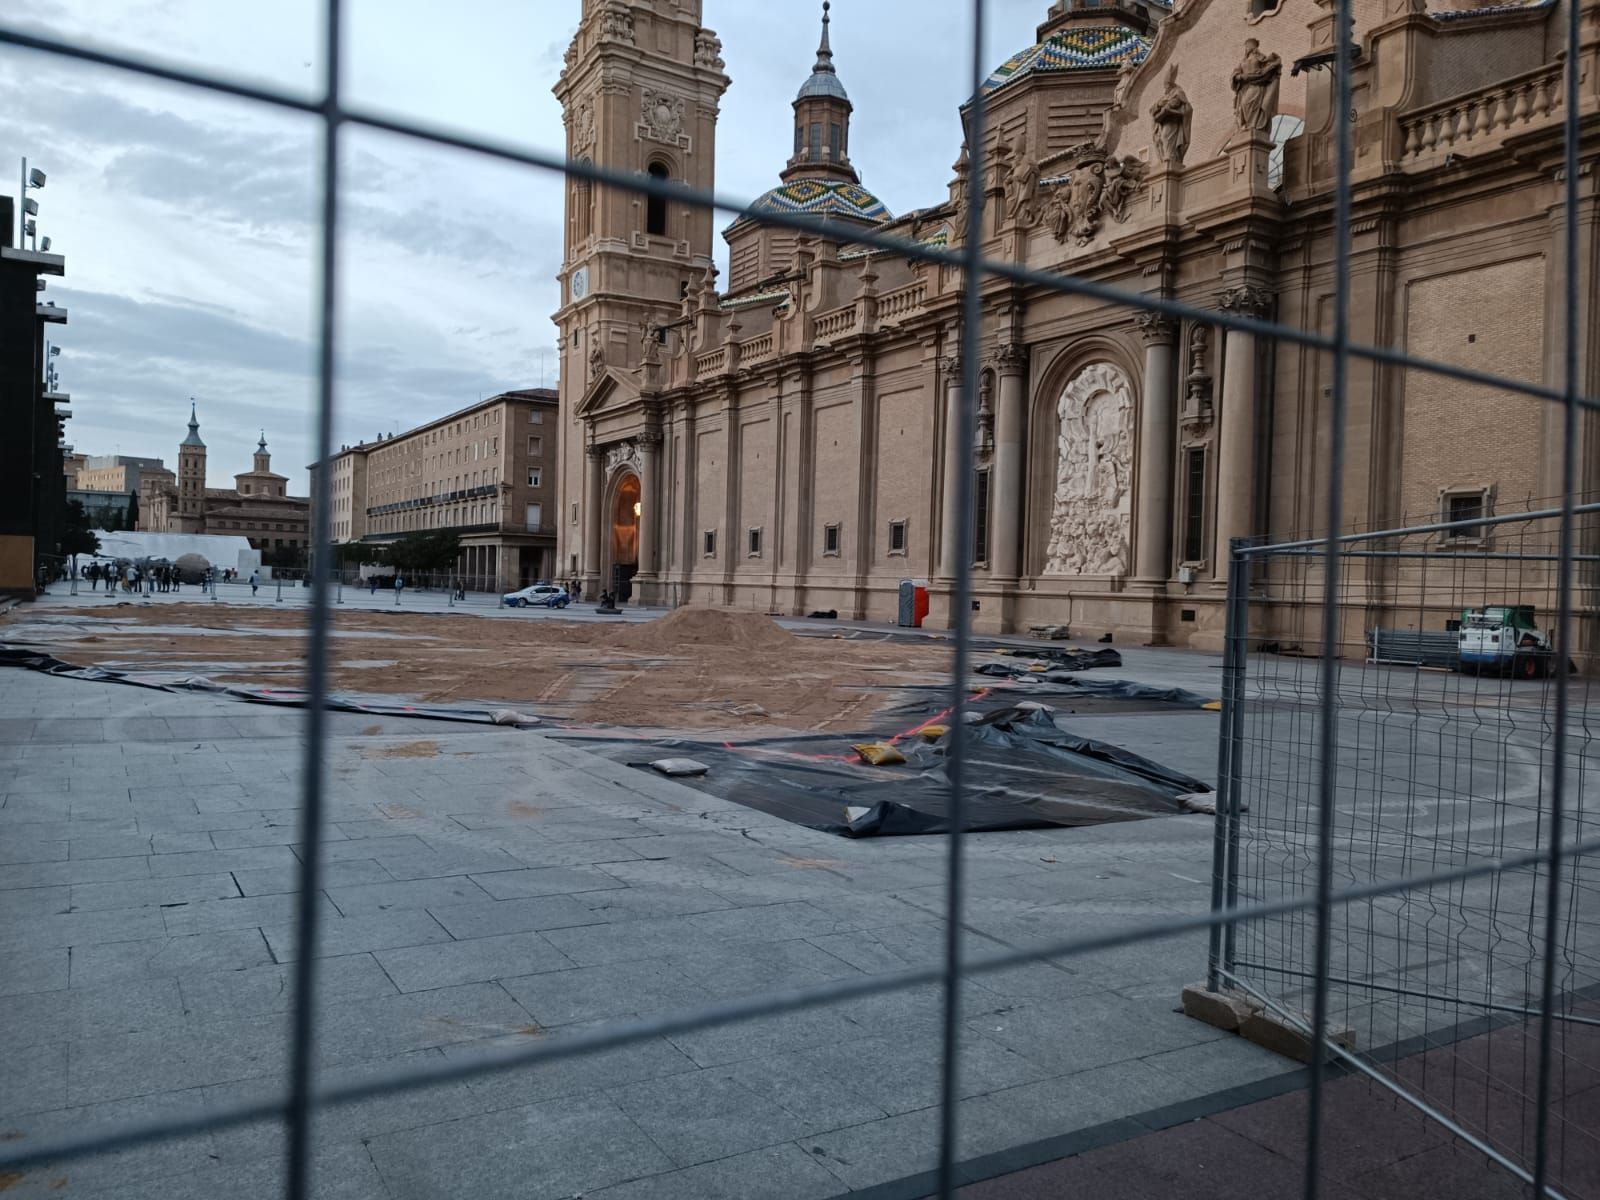 Arranca el montaje del Belén gigante de la plaza del Pilar